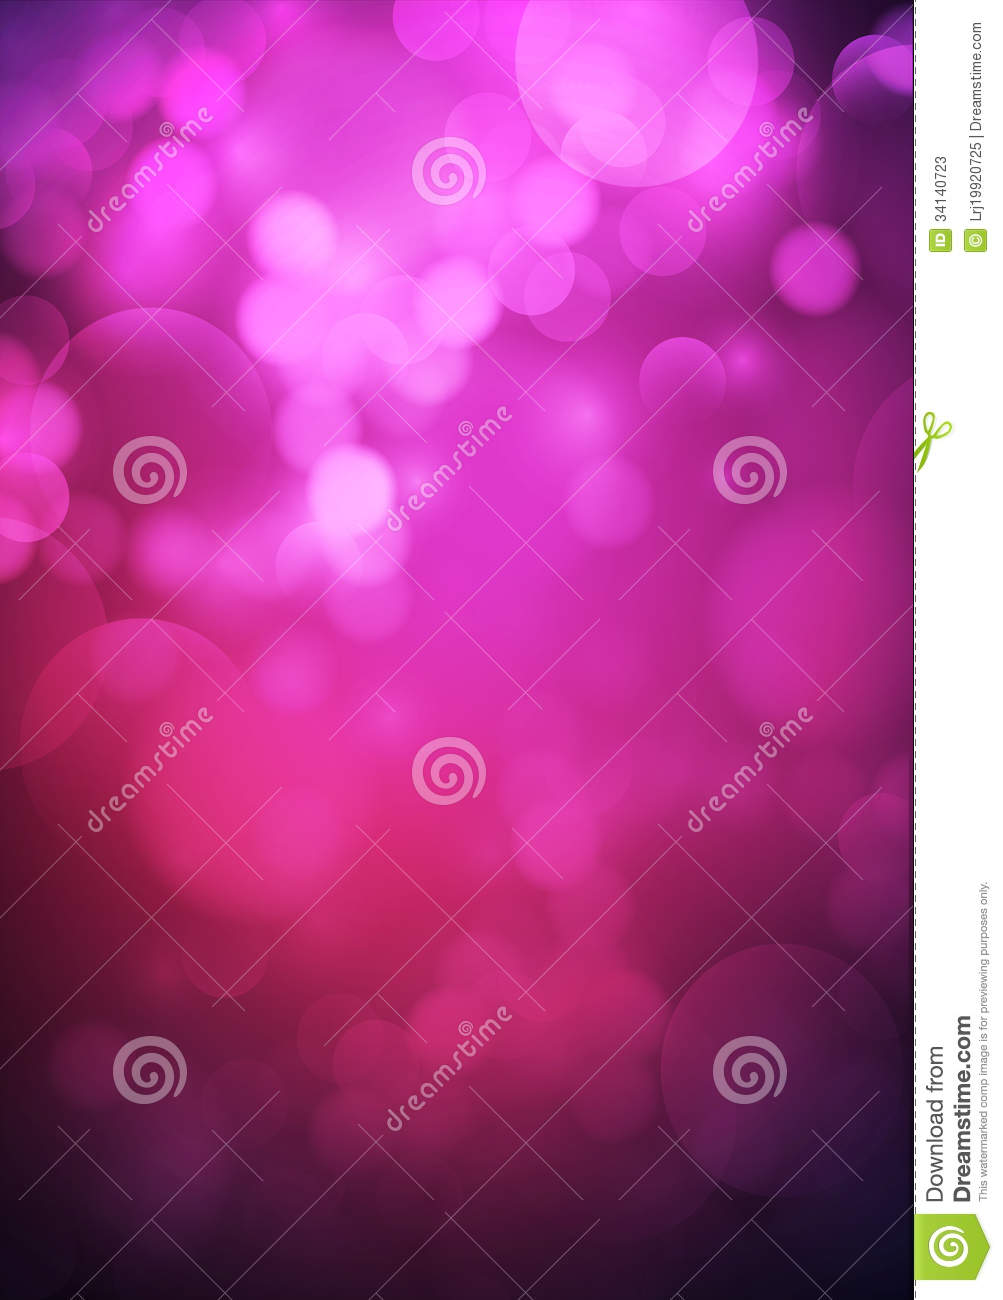 Aperture Fuzzy Pink Purple Romantic Background Stock Photos   Image